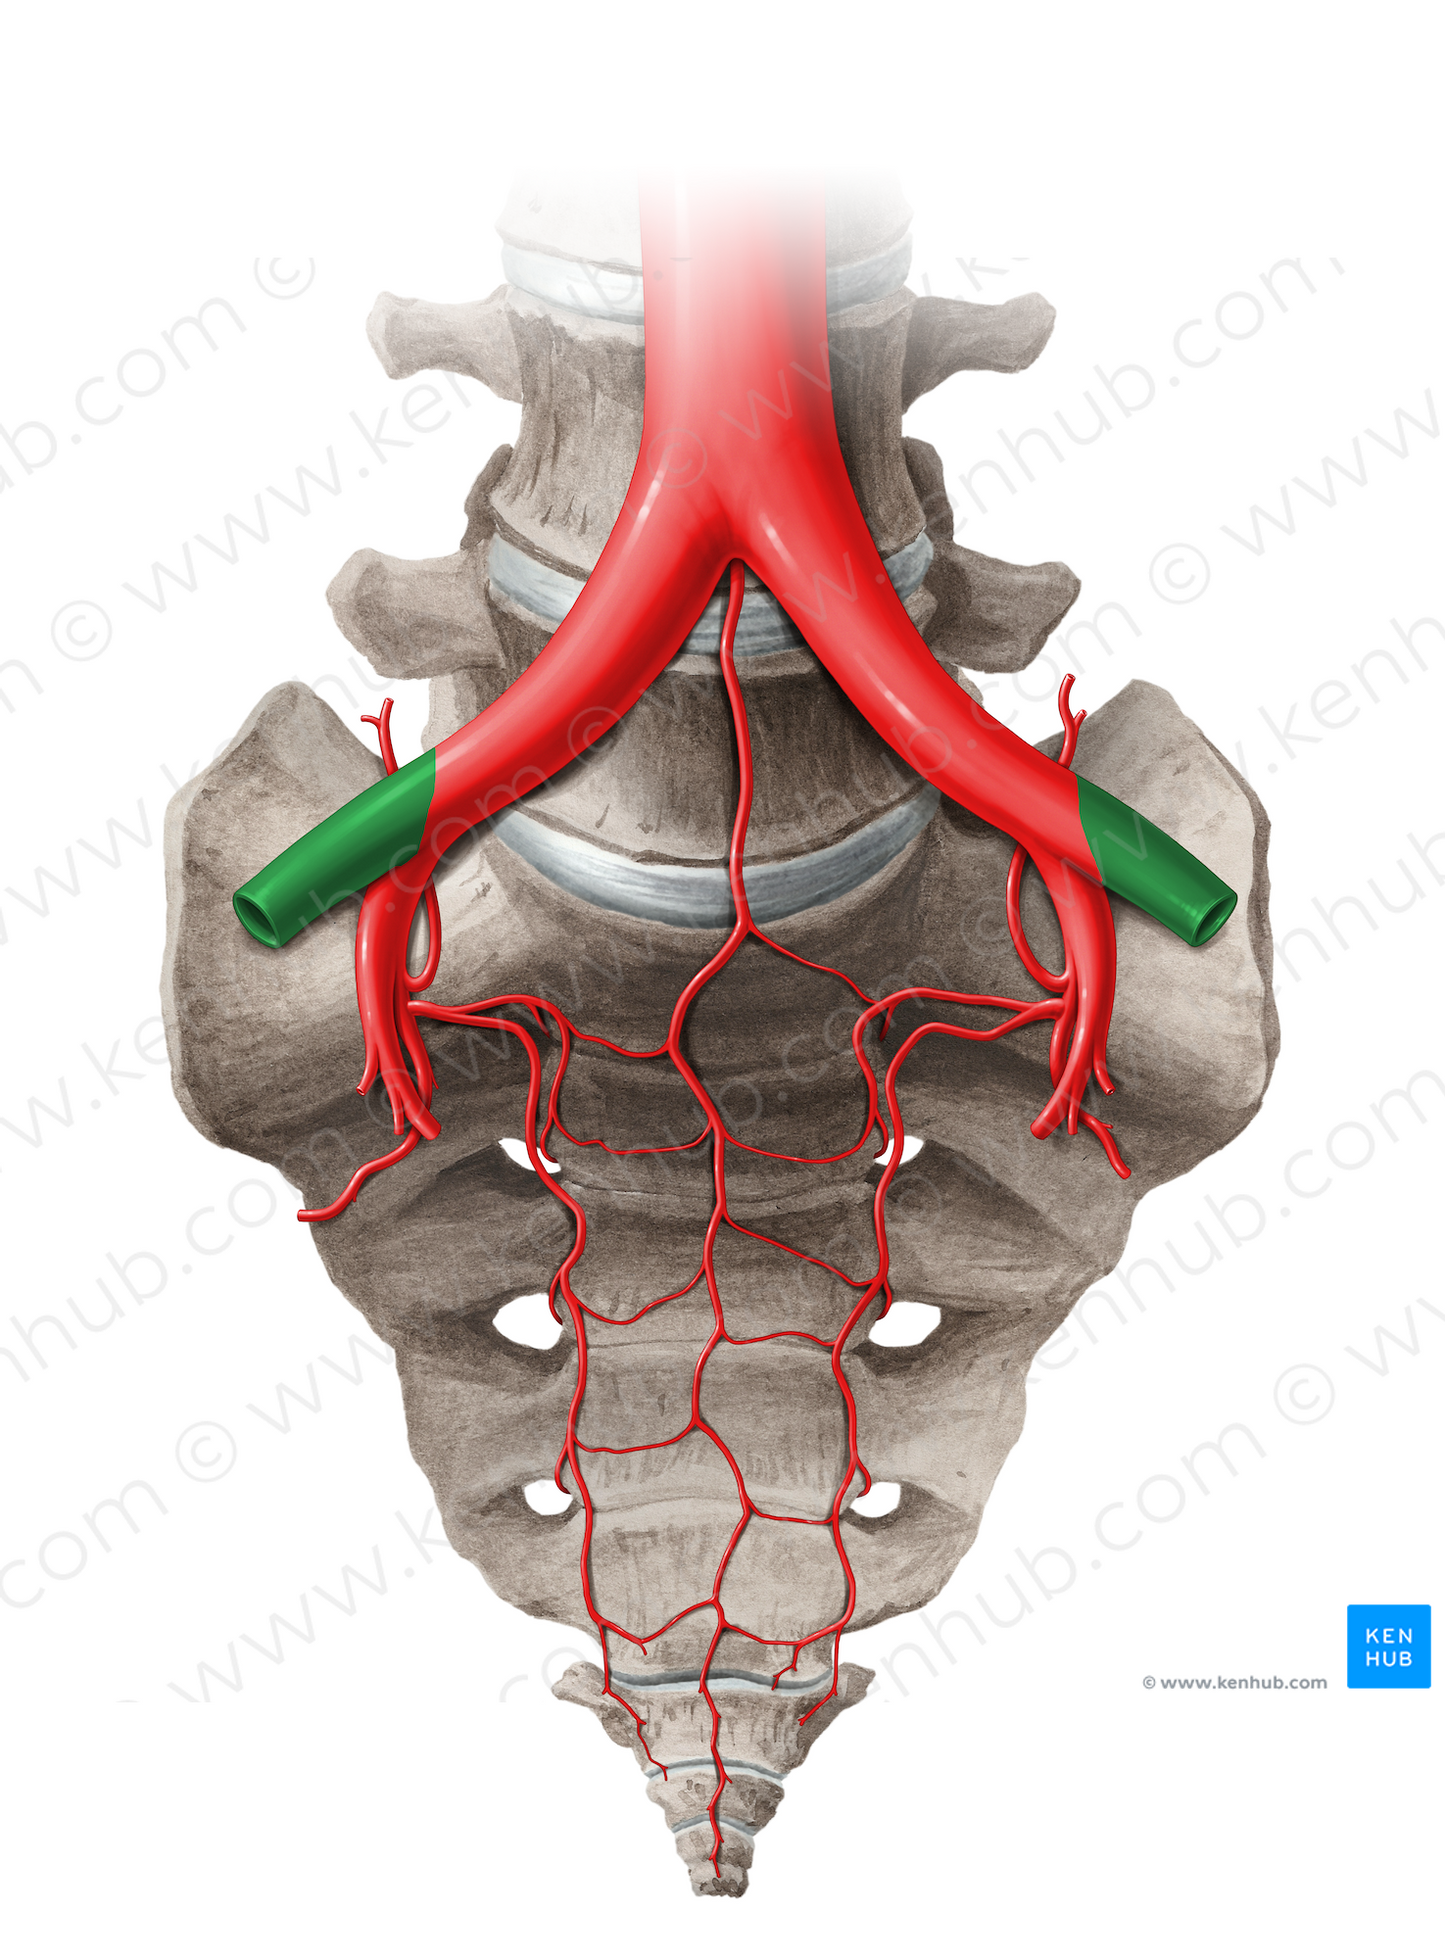 External iliac artery (#14054)